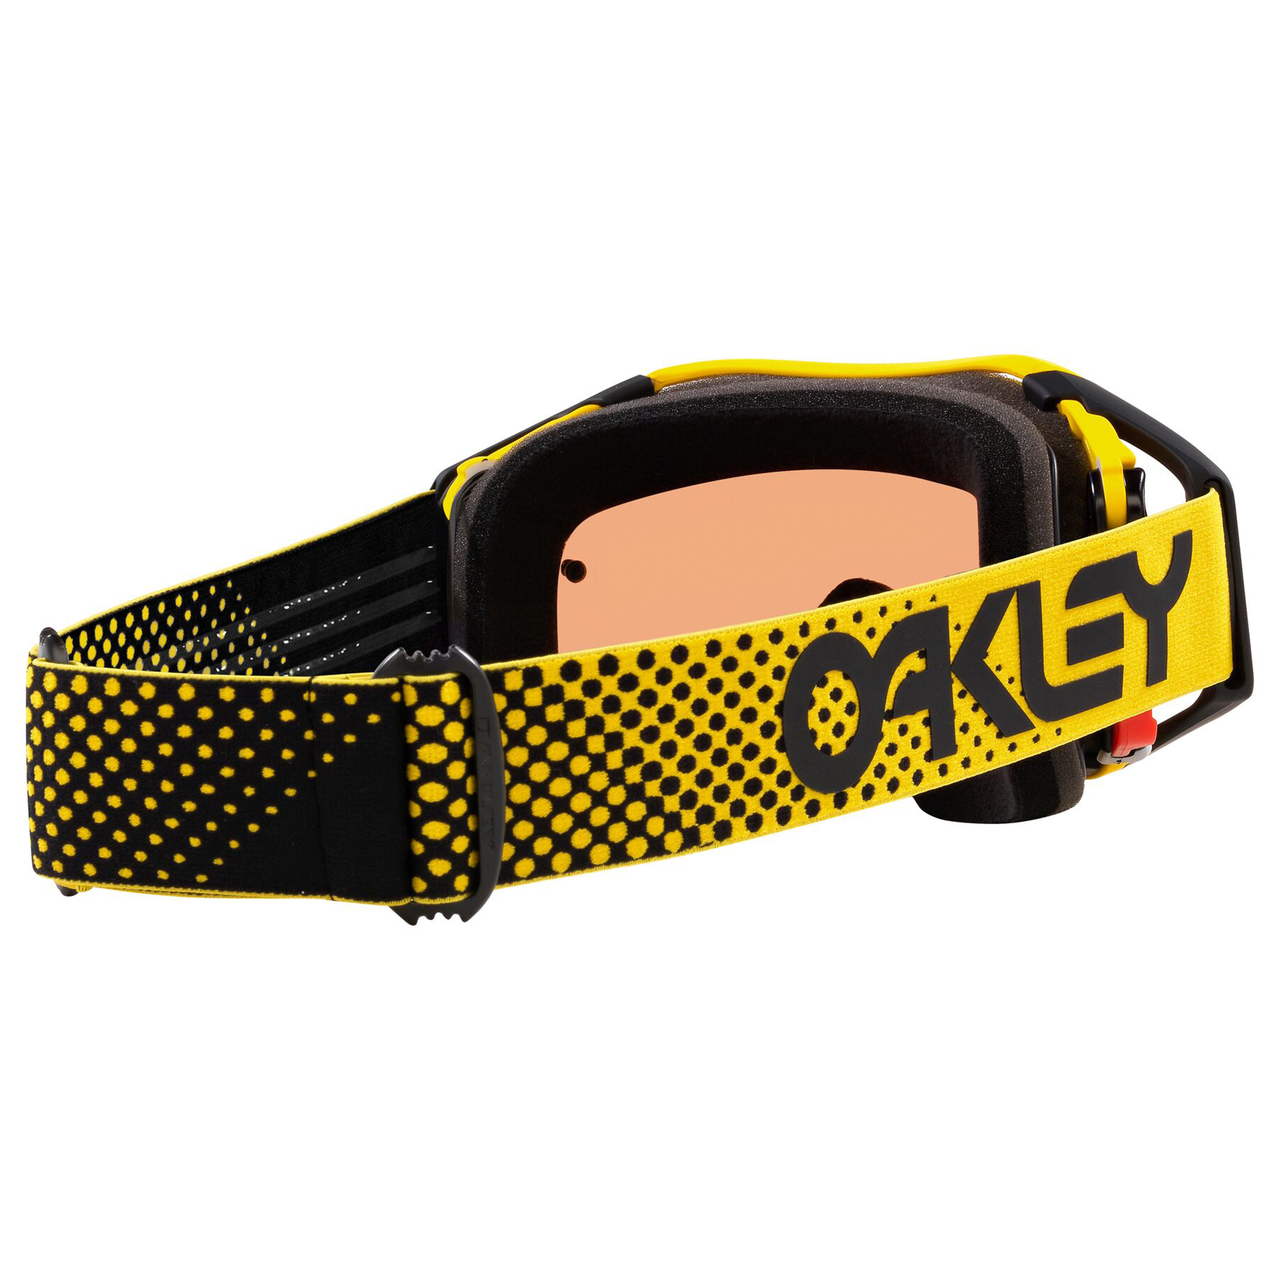 Oakley Airbrake MX Goggle Moto Yellow 2 - Prizm Bronze Lens